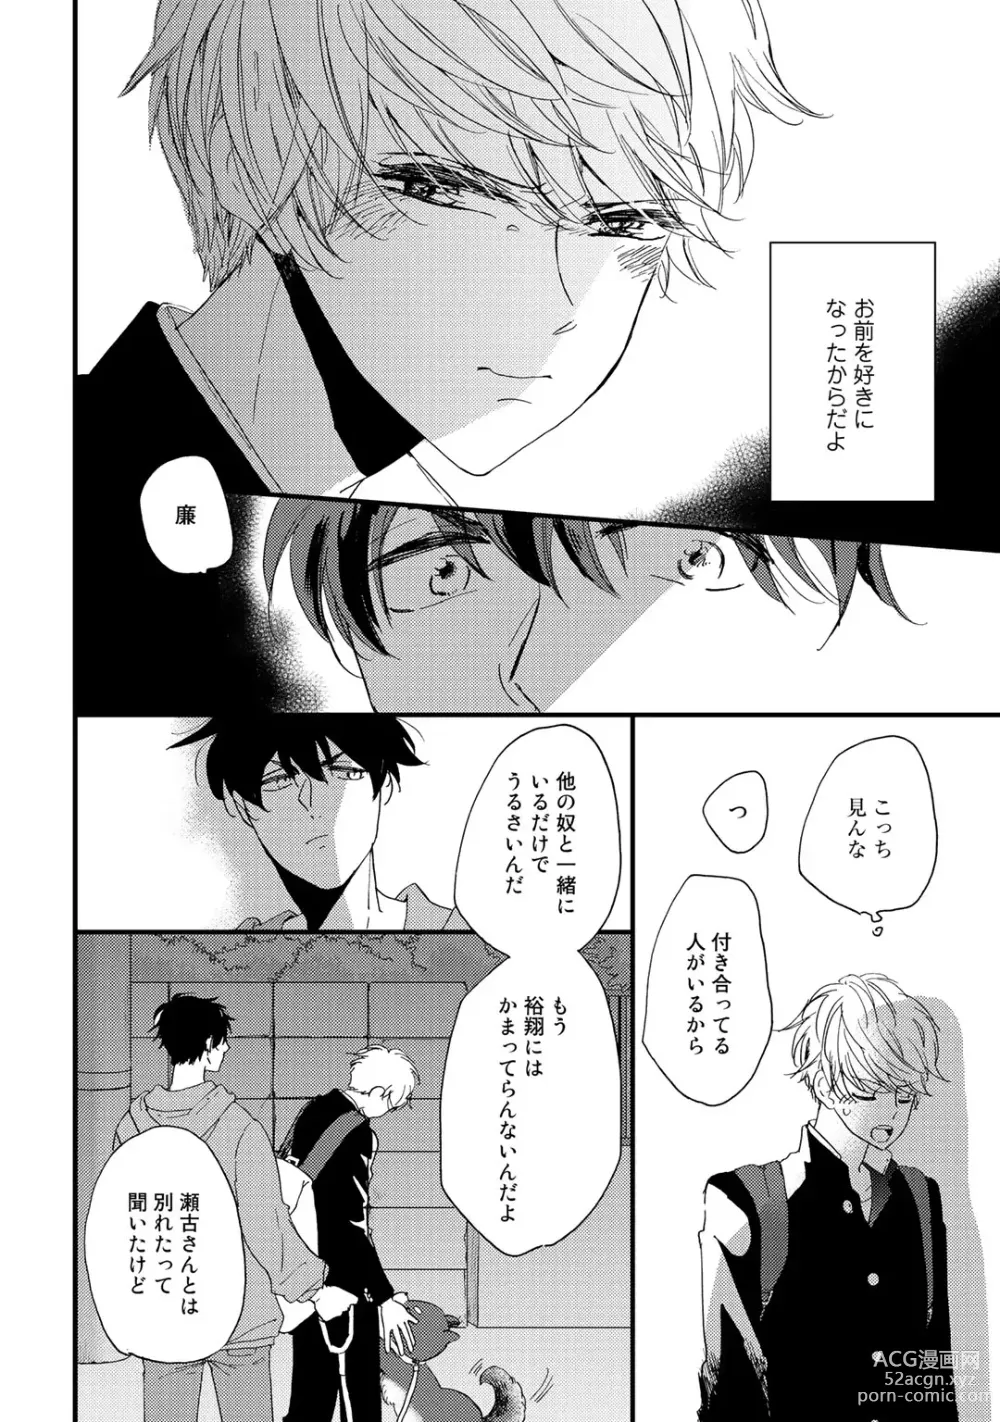 Page 26 of manga Hatsukoi Escape